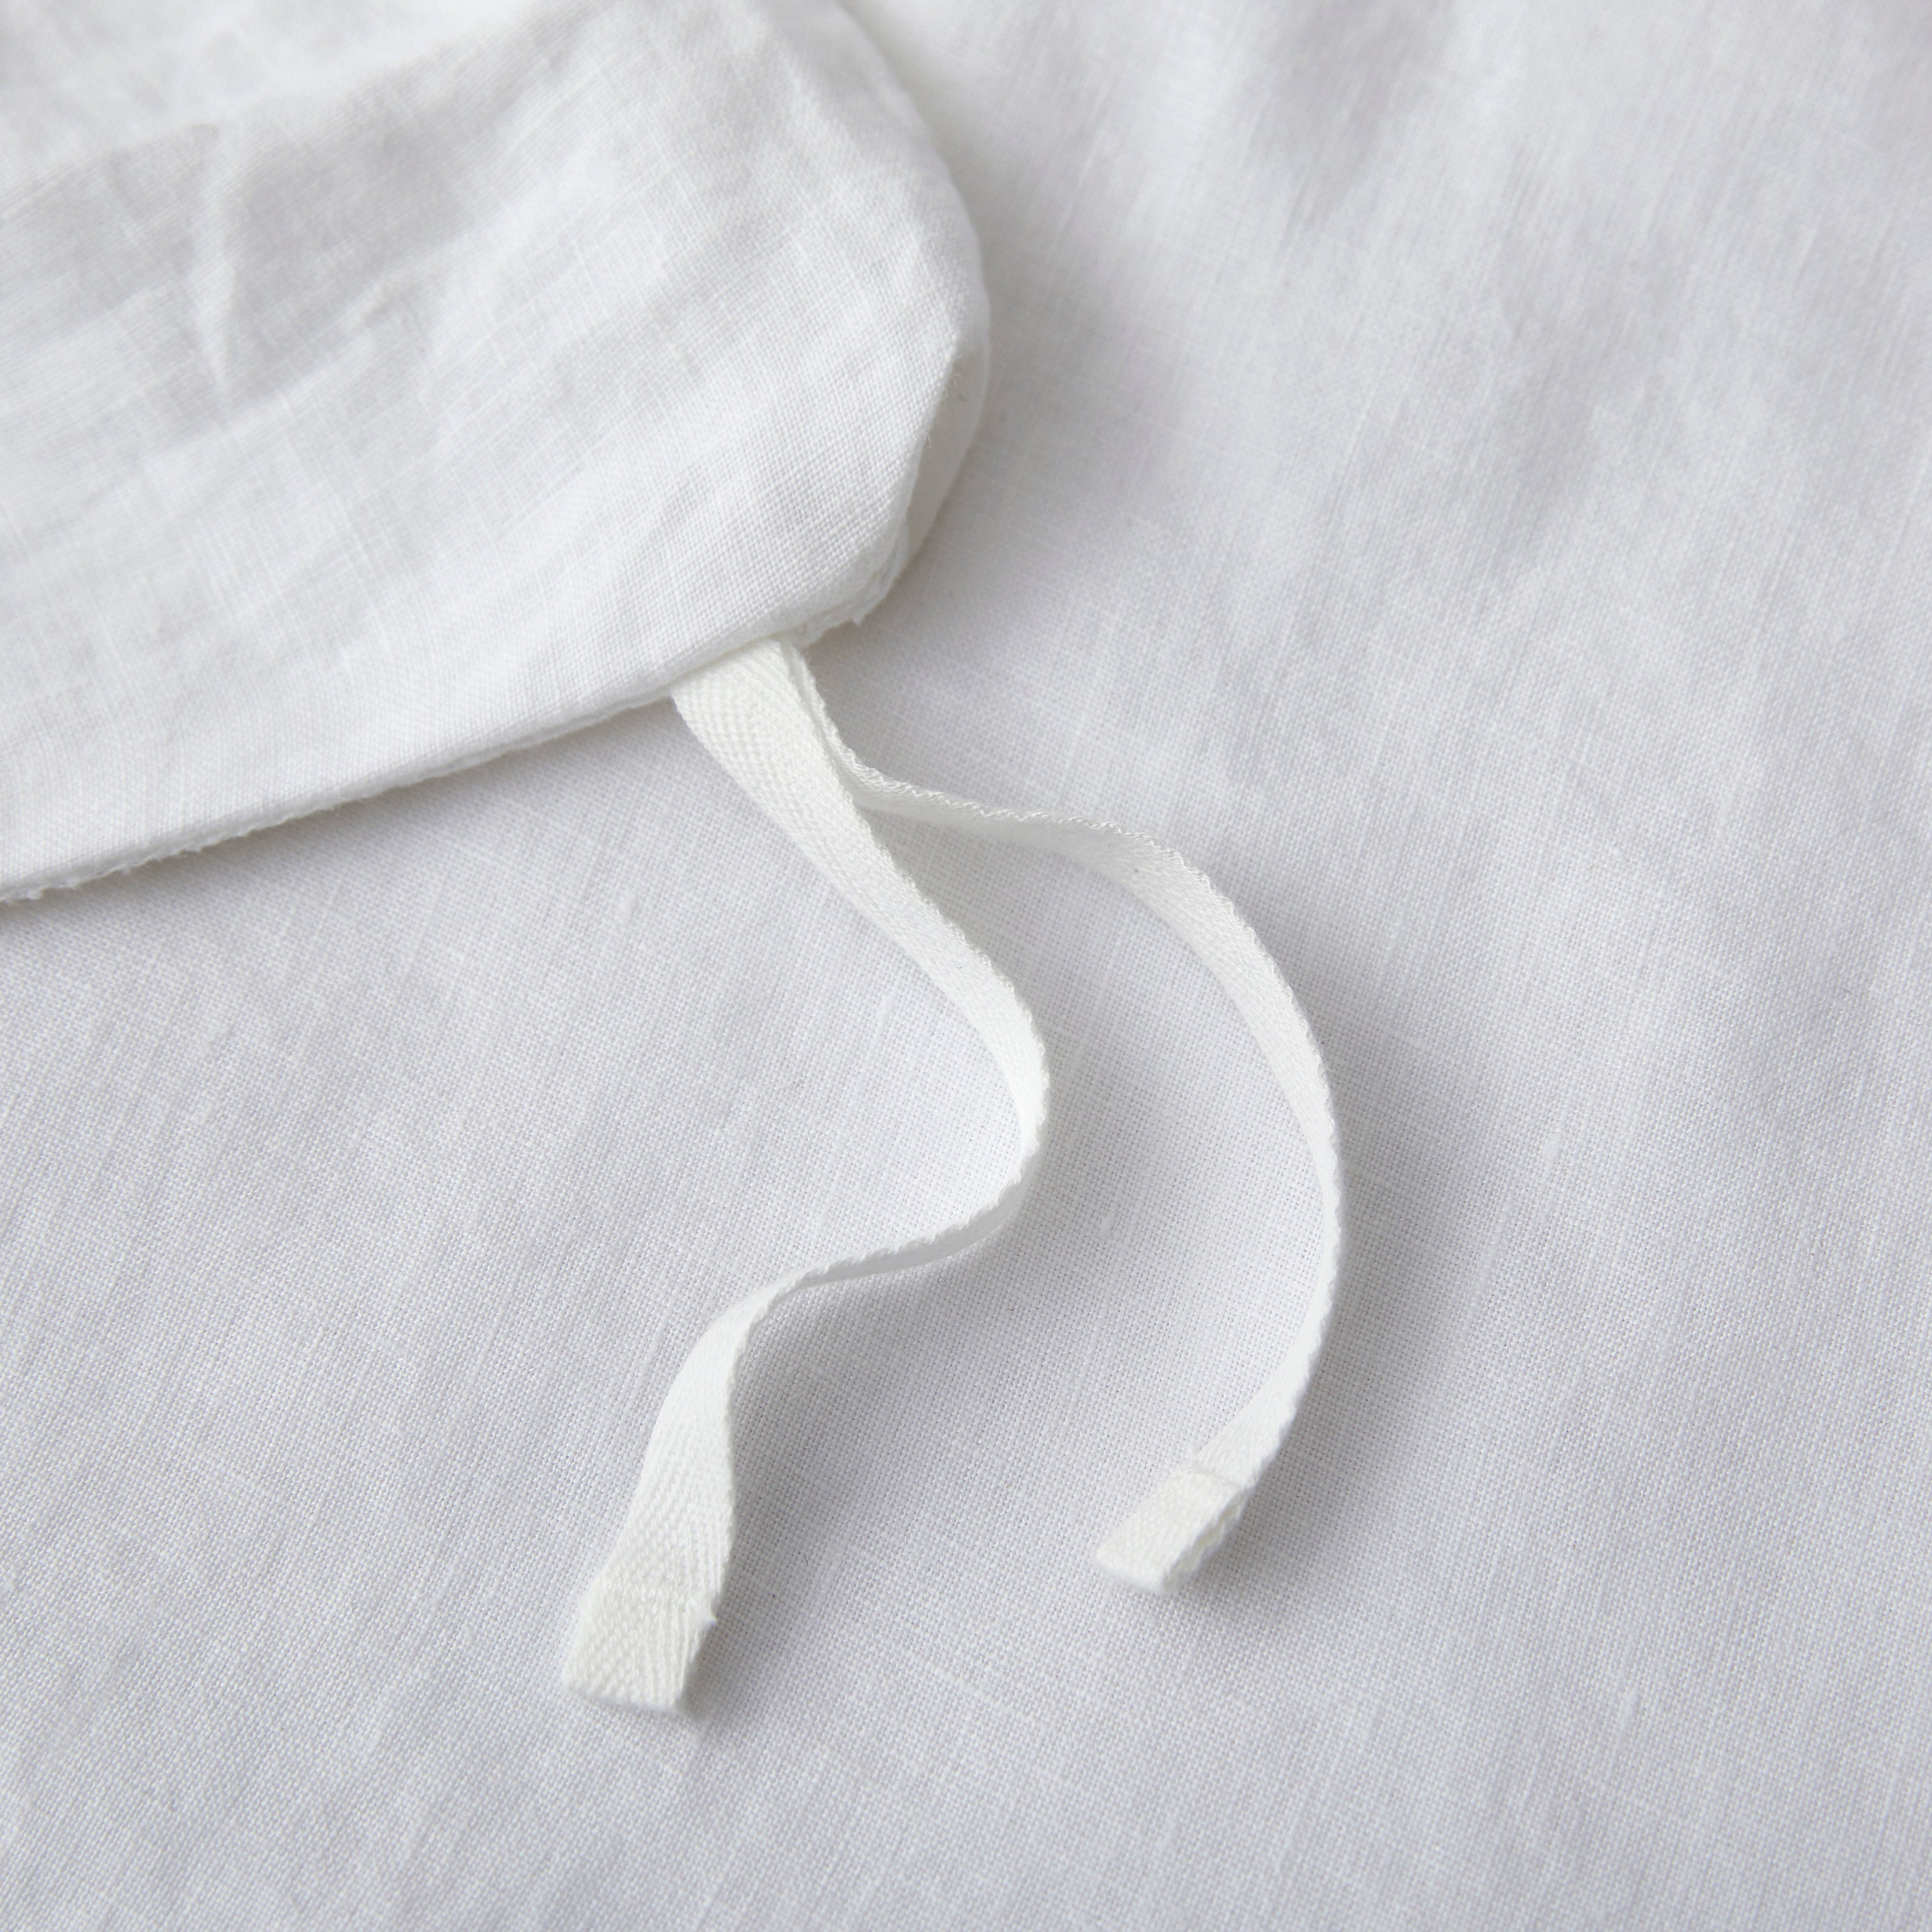 100% Linen Bedding Set Duvet Cover Queen, White